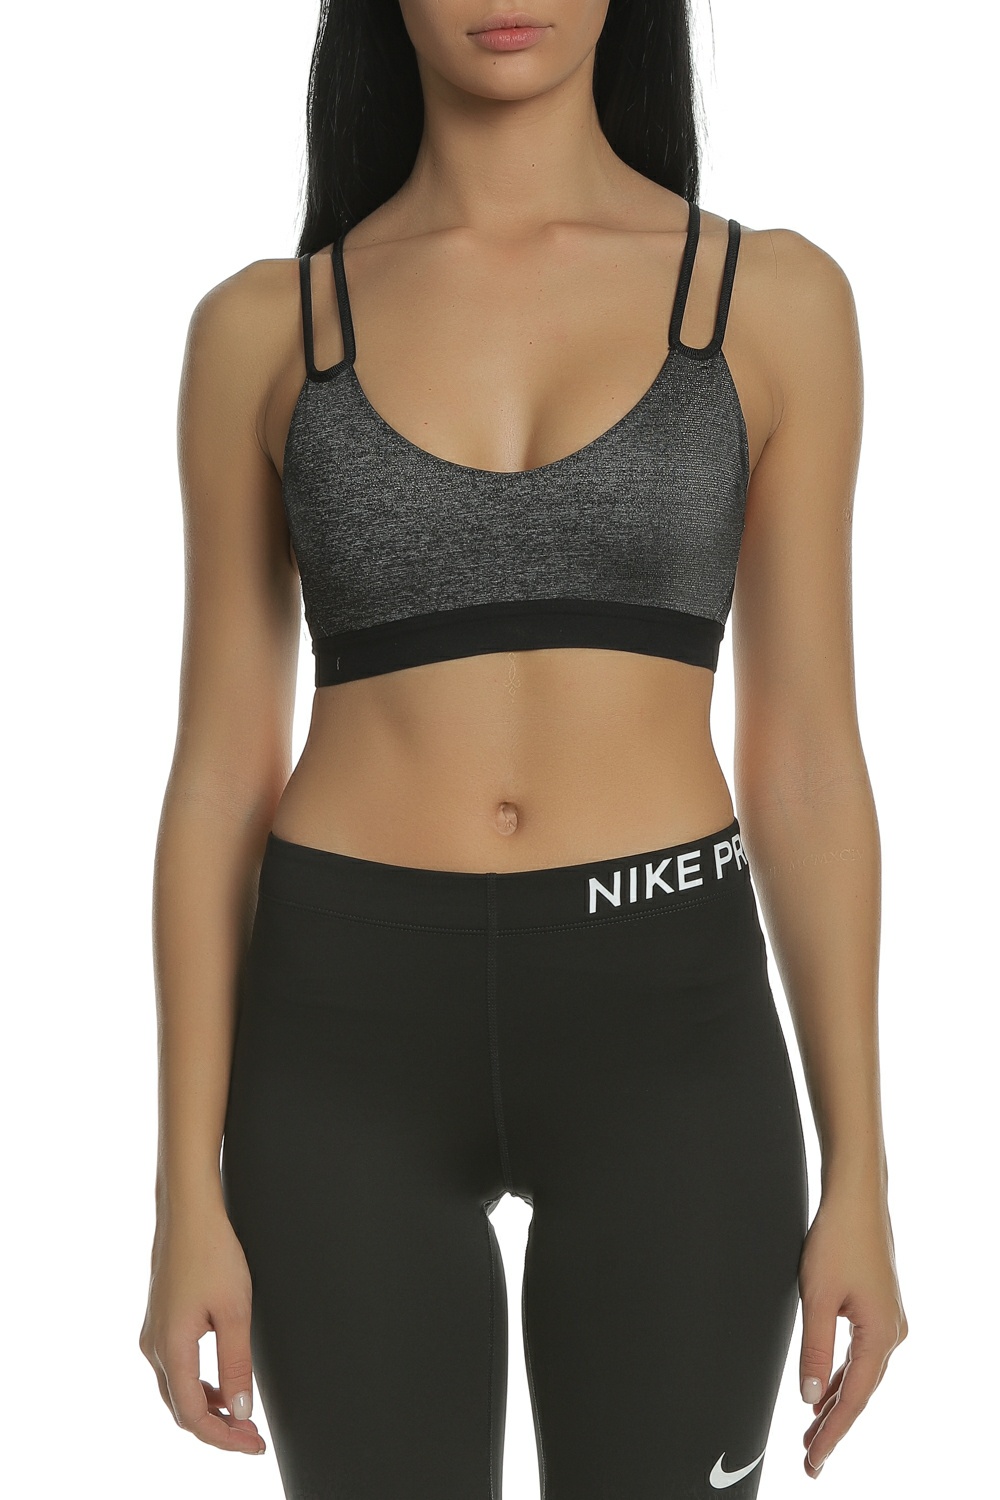 NIKE - Γυναικείο αθλητικό μπουστάκι NIKE INDY SPARKLE ανθρακί Γυναικεία/Ρούχα/Αθλητικά/Μπουστάκια